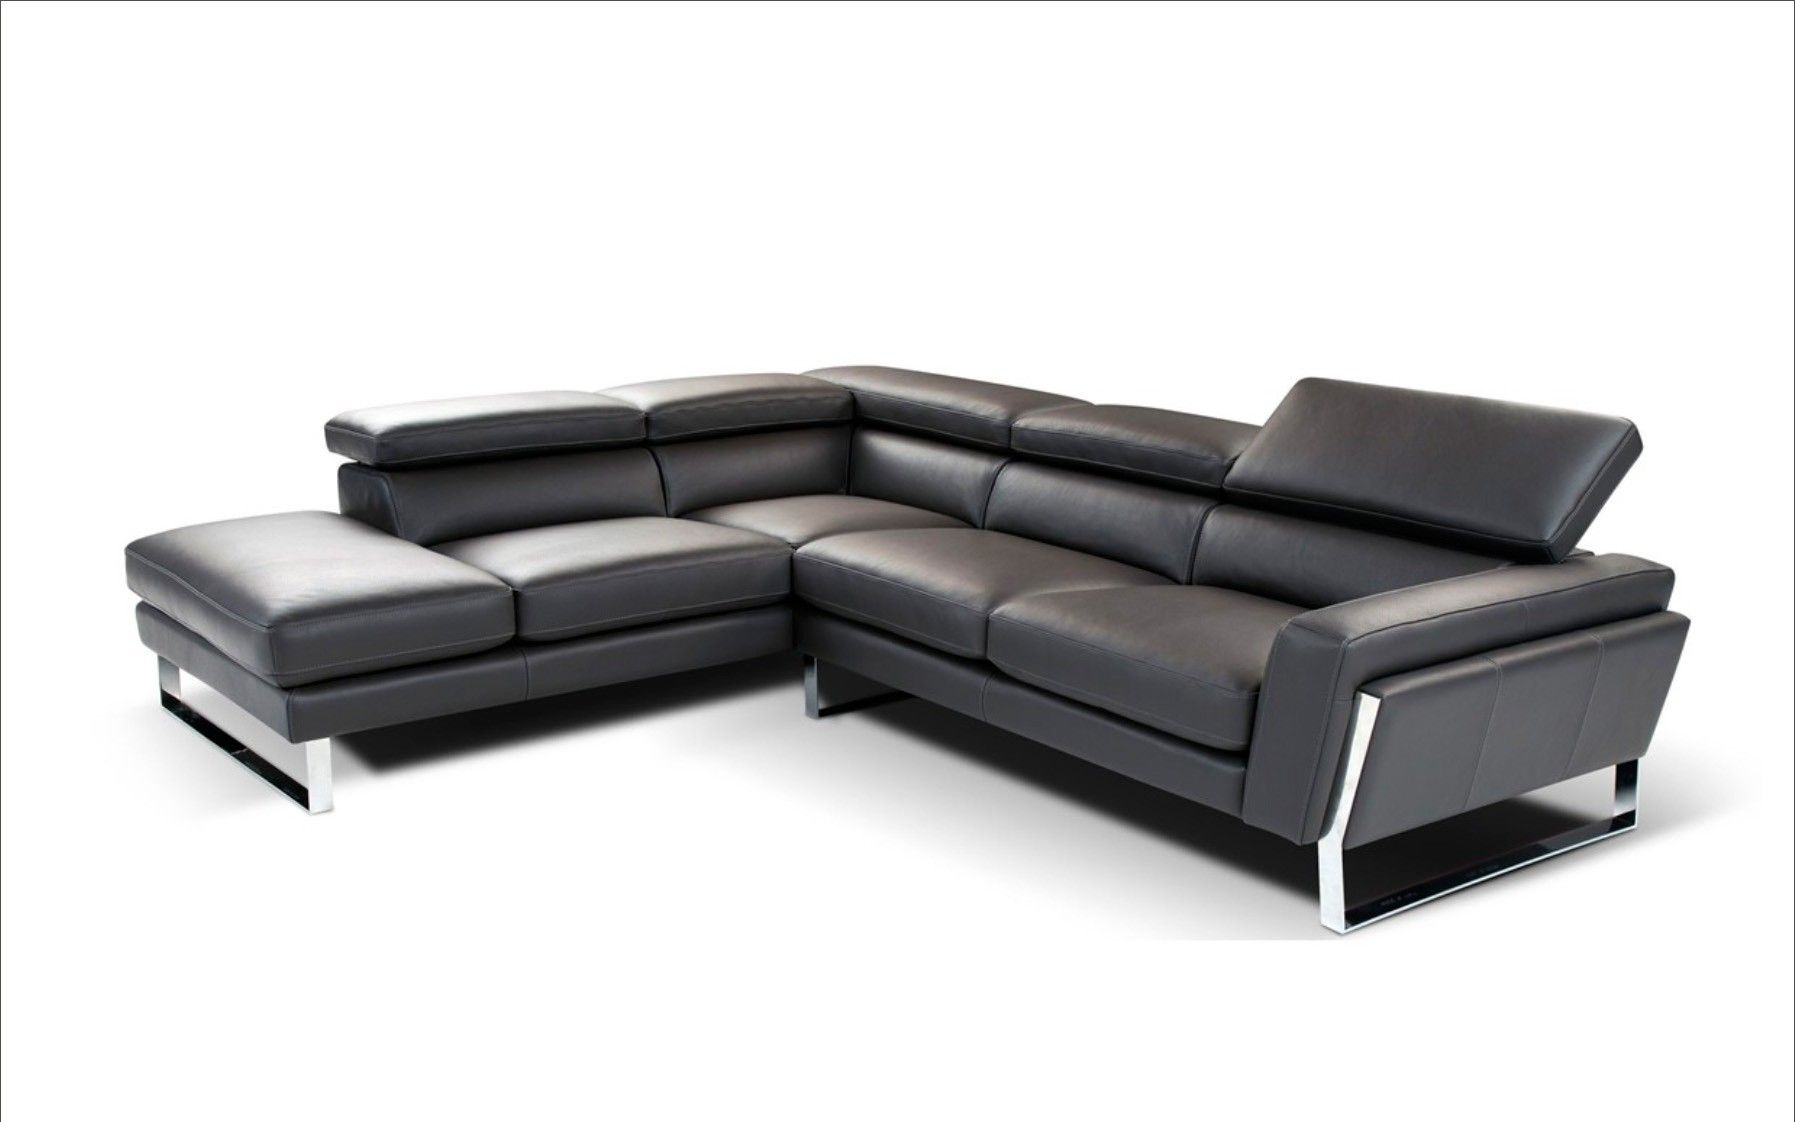 napoli leather sofa review